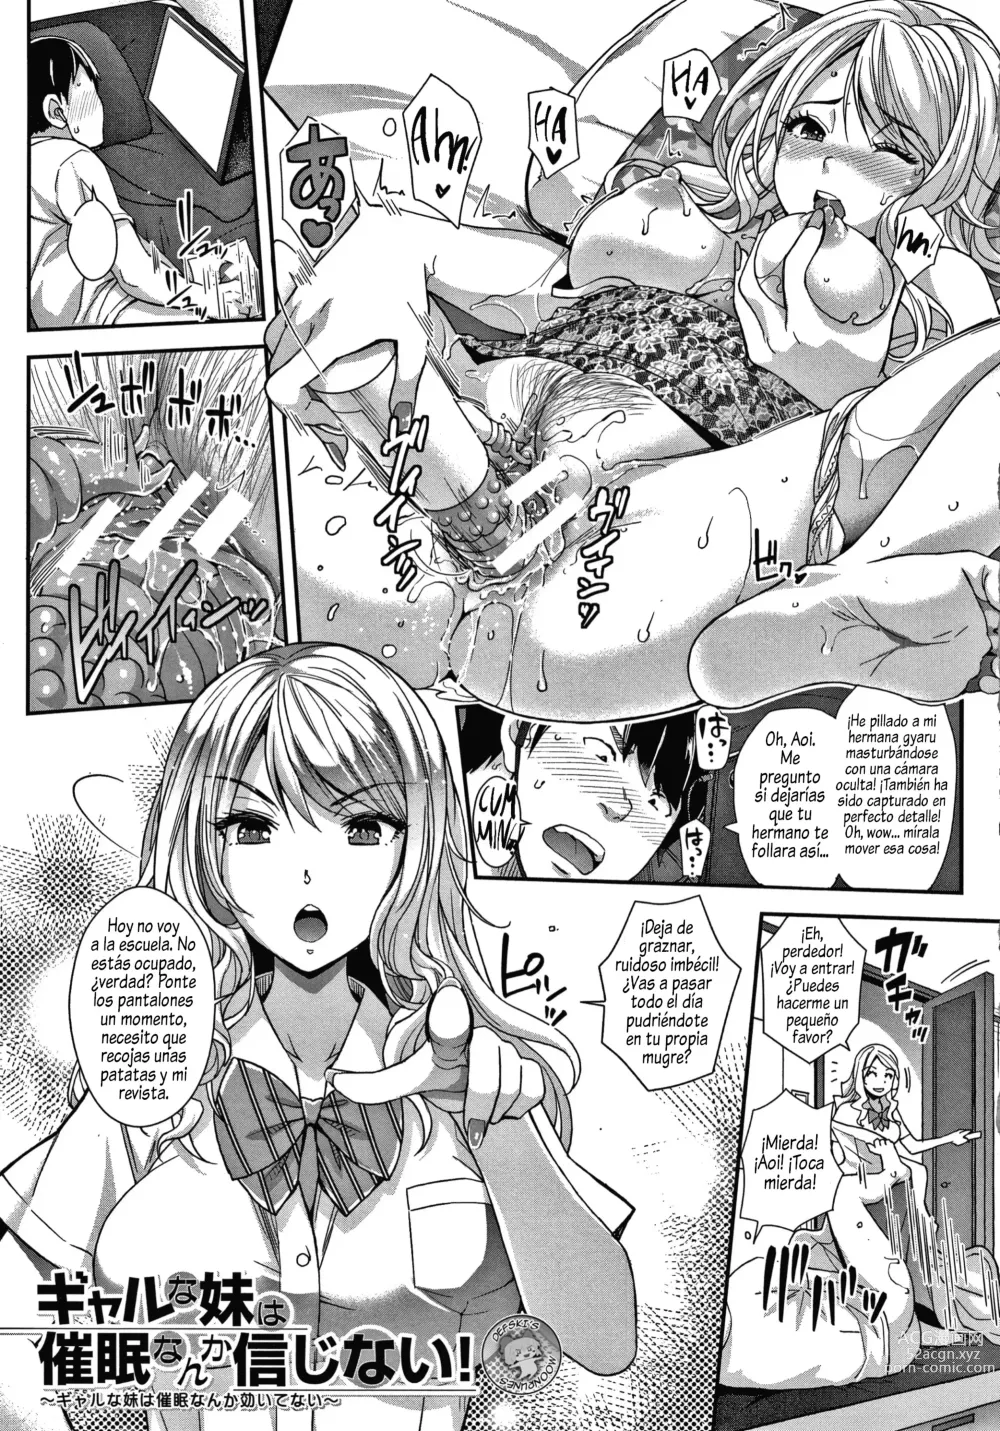 Page 5 of manga Gal na Imouto wa Saimin Play de Ikimakuru! - Gal sister cums in hypnotic play